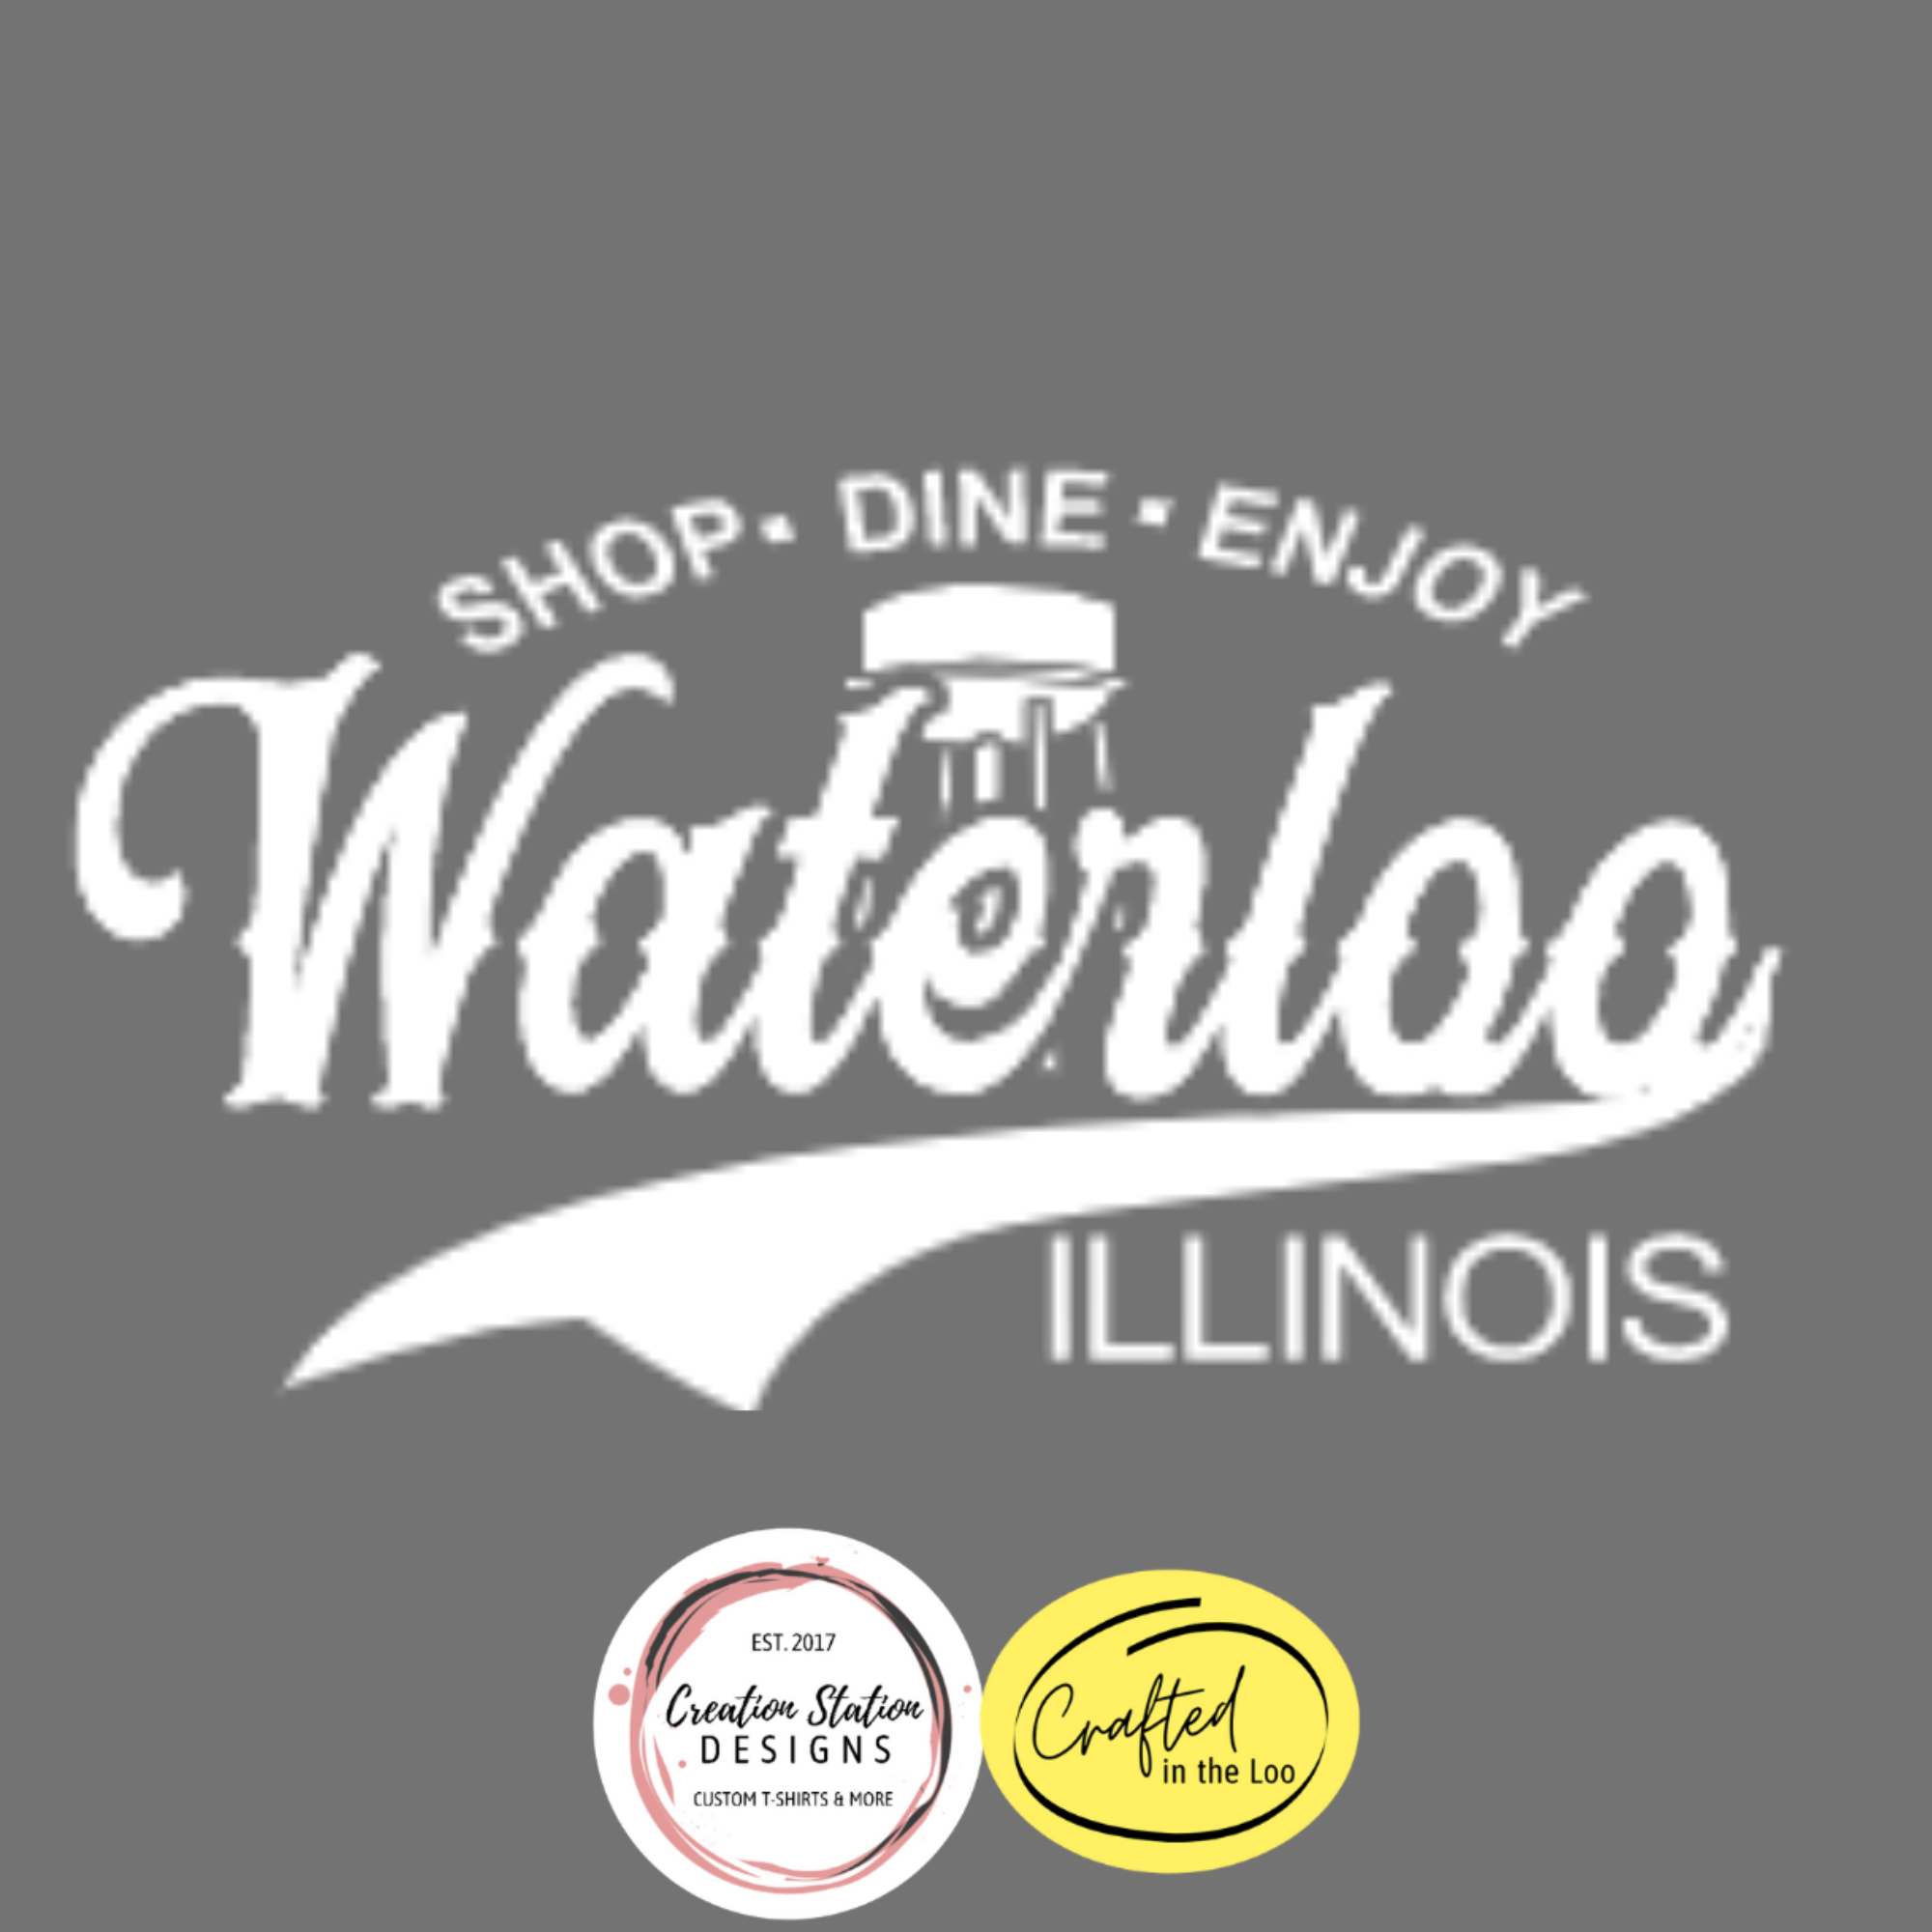 Shop-Dine-Enjoy Waterloo Tee